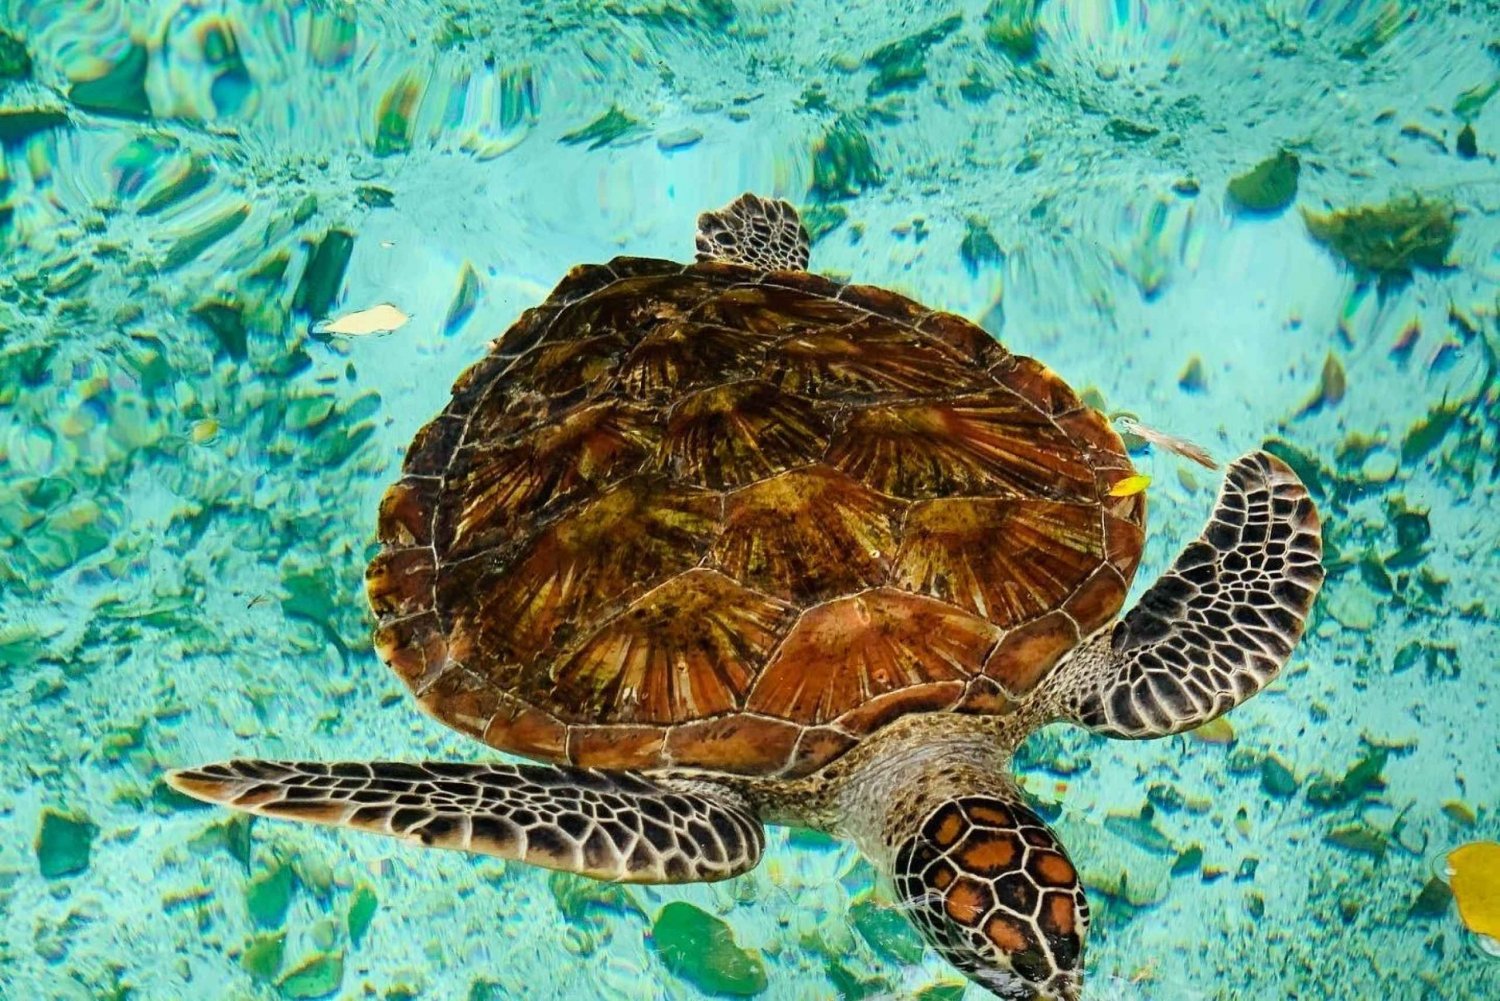 Zanzibar: Swimming with the Turtles at the Natural Aquarium